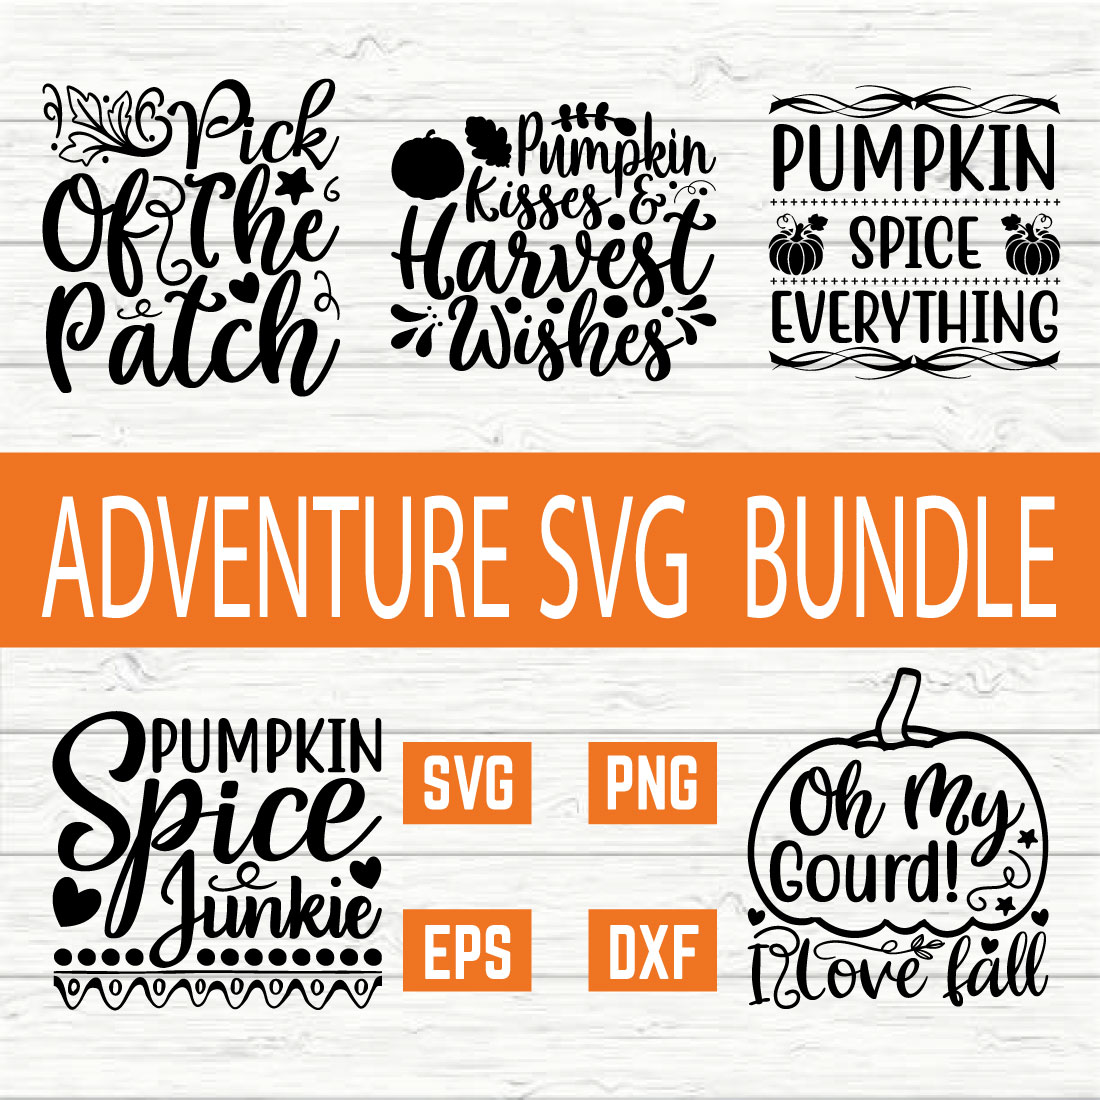 Autumn Typography Bundle vol 3 cover image.